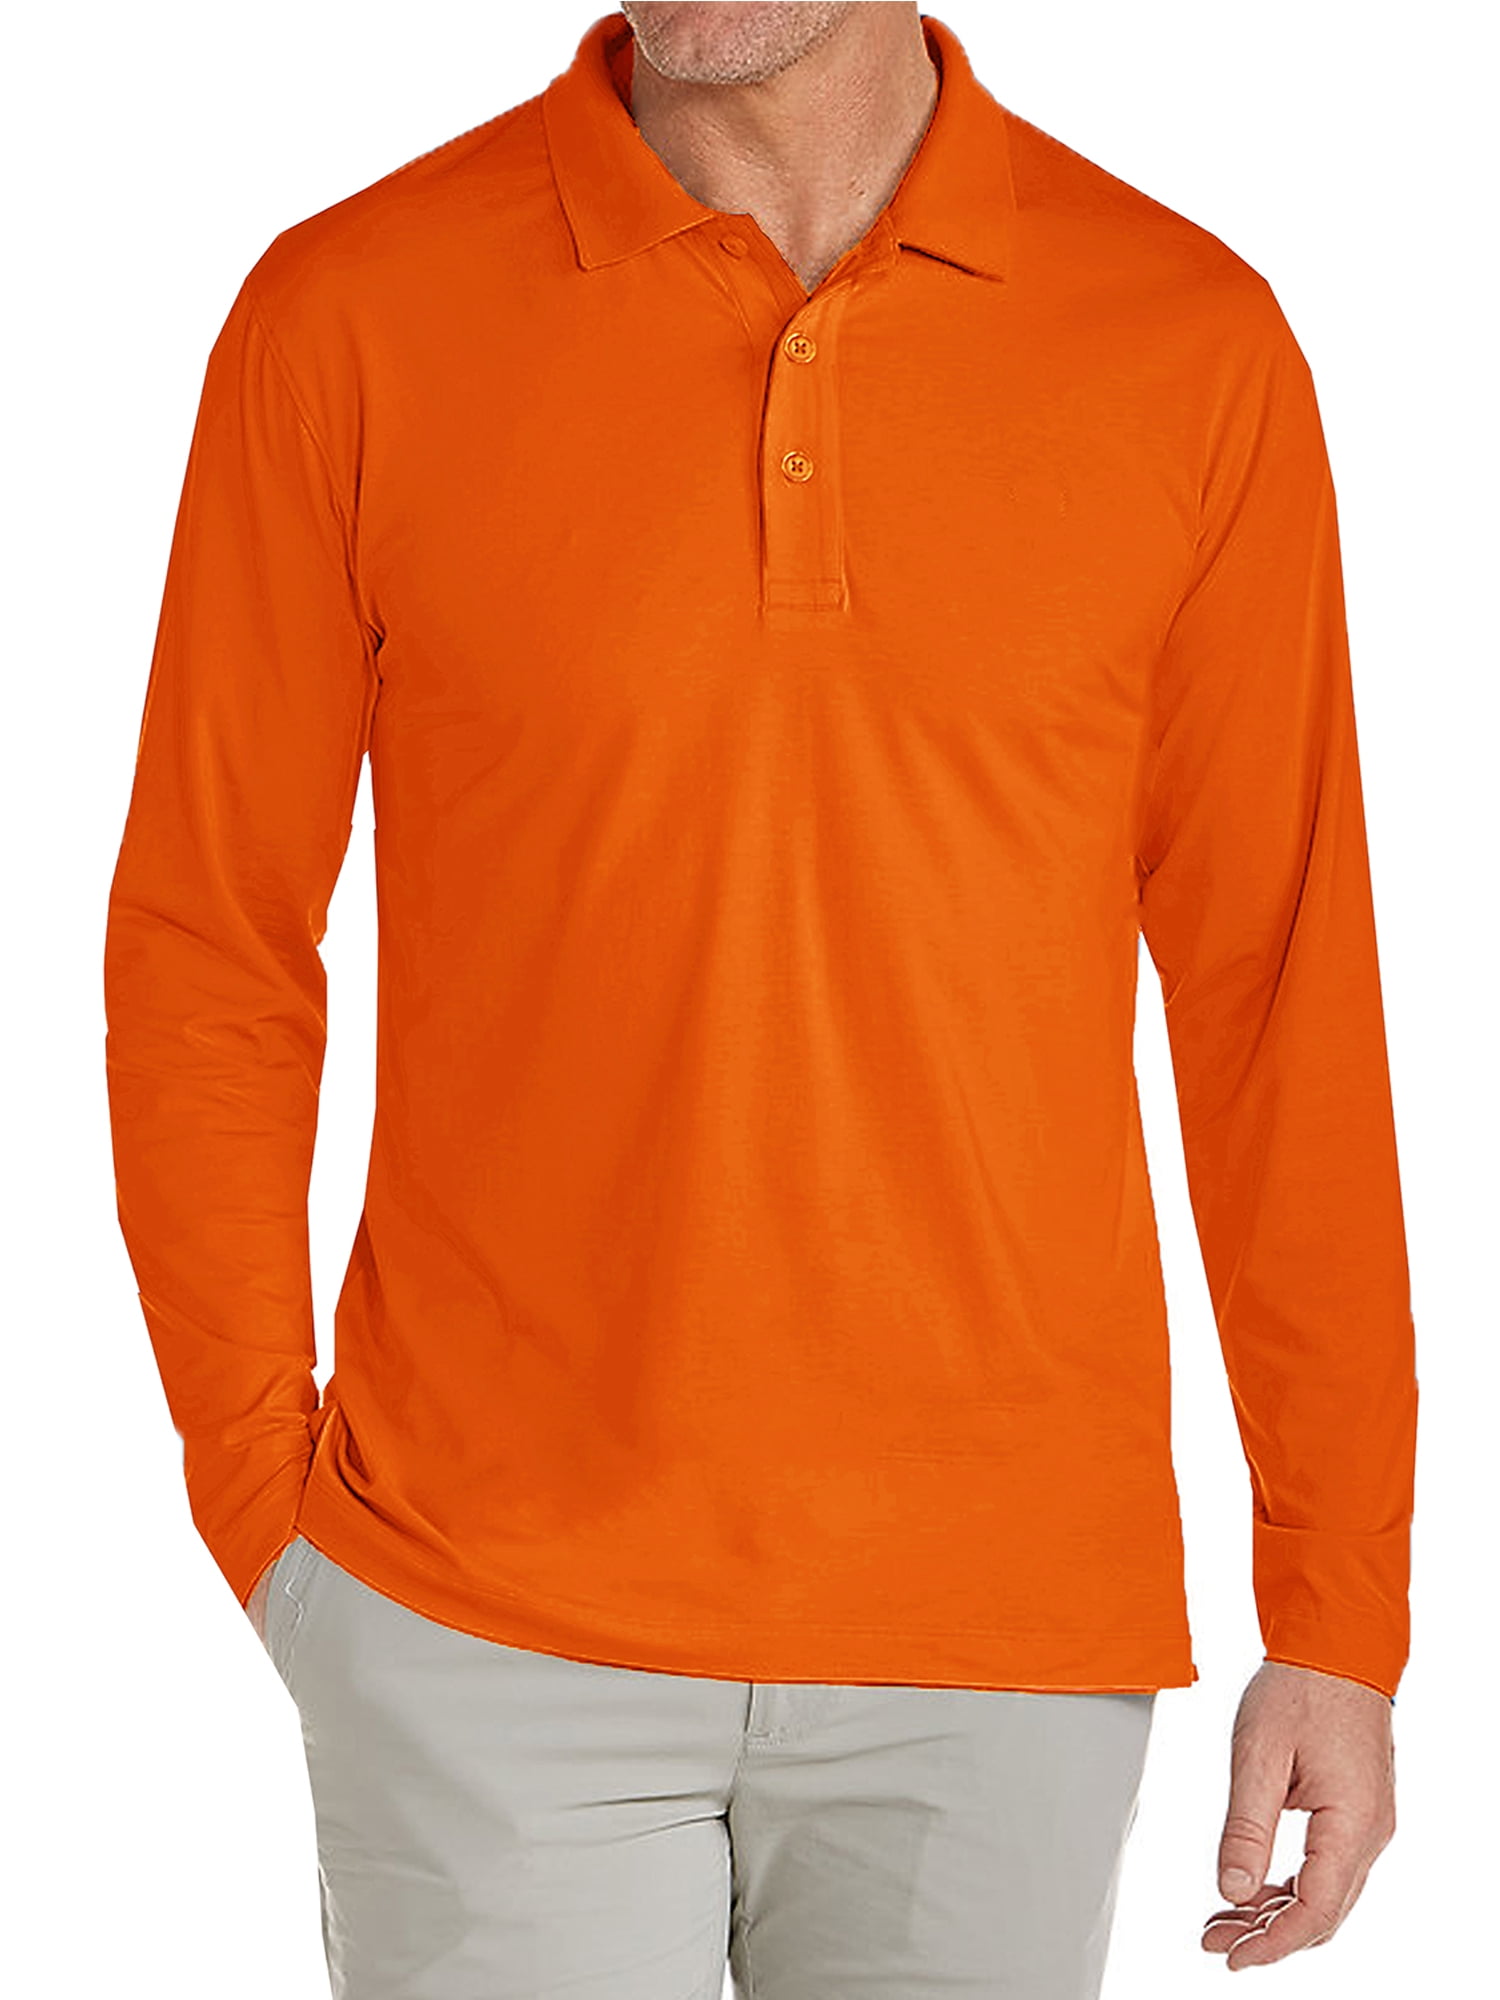 GBH - Men's Long Sleeve Polo Shirts - Walmart.com - Walmart.com